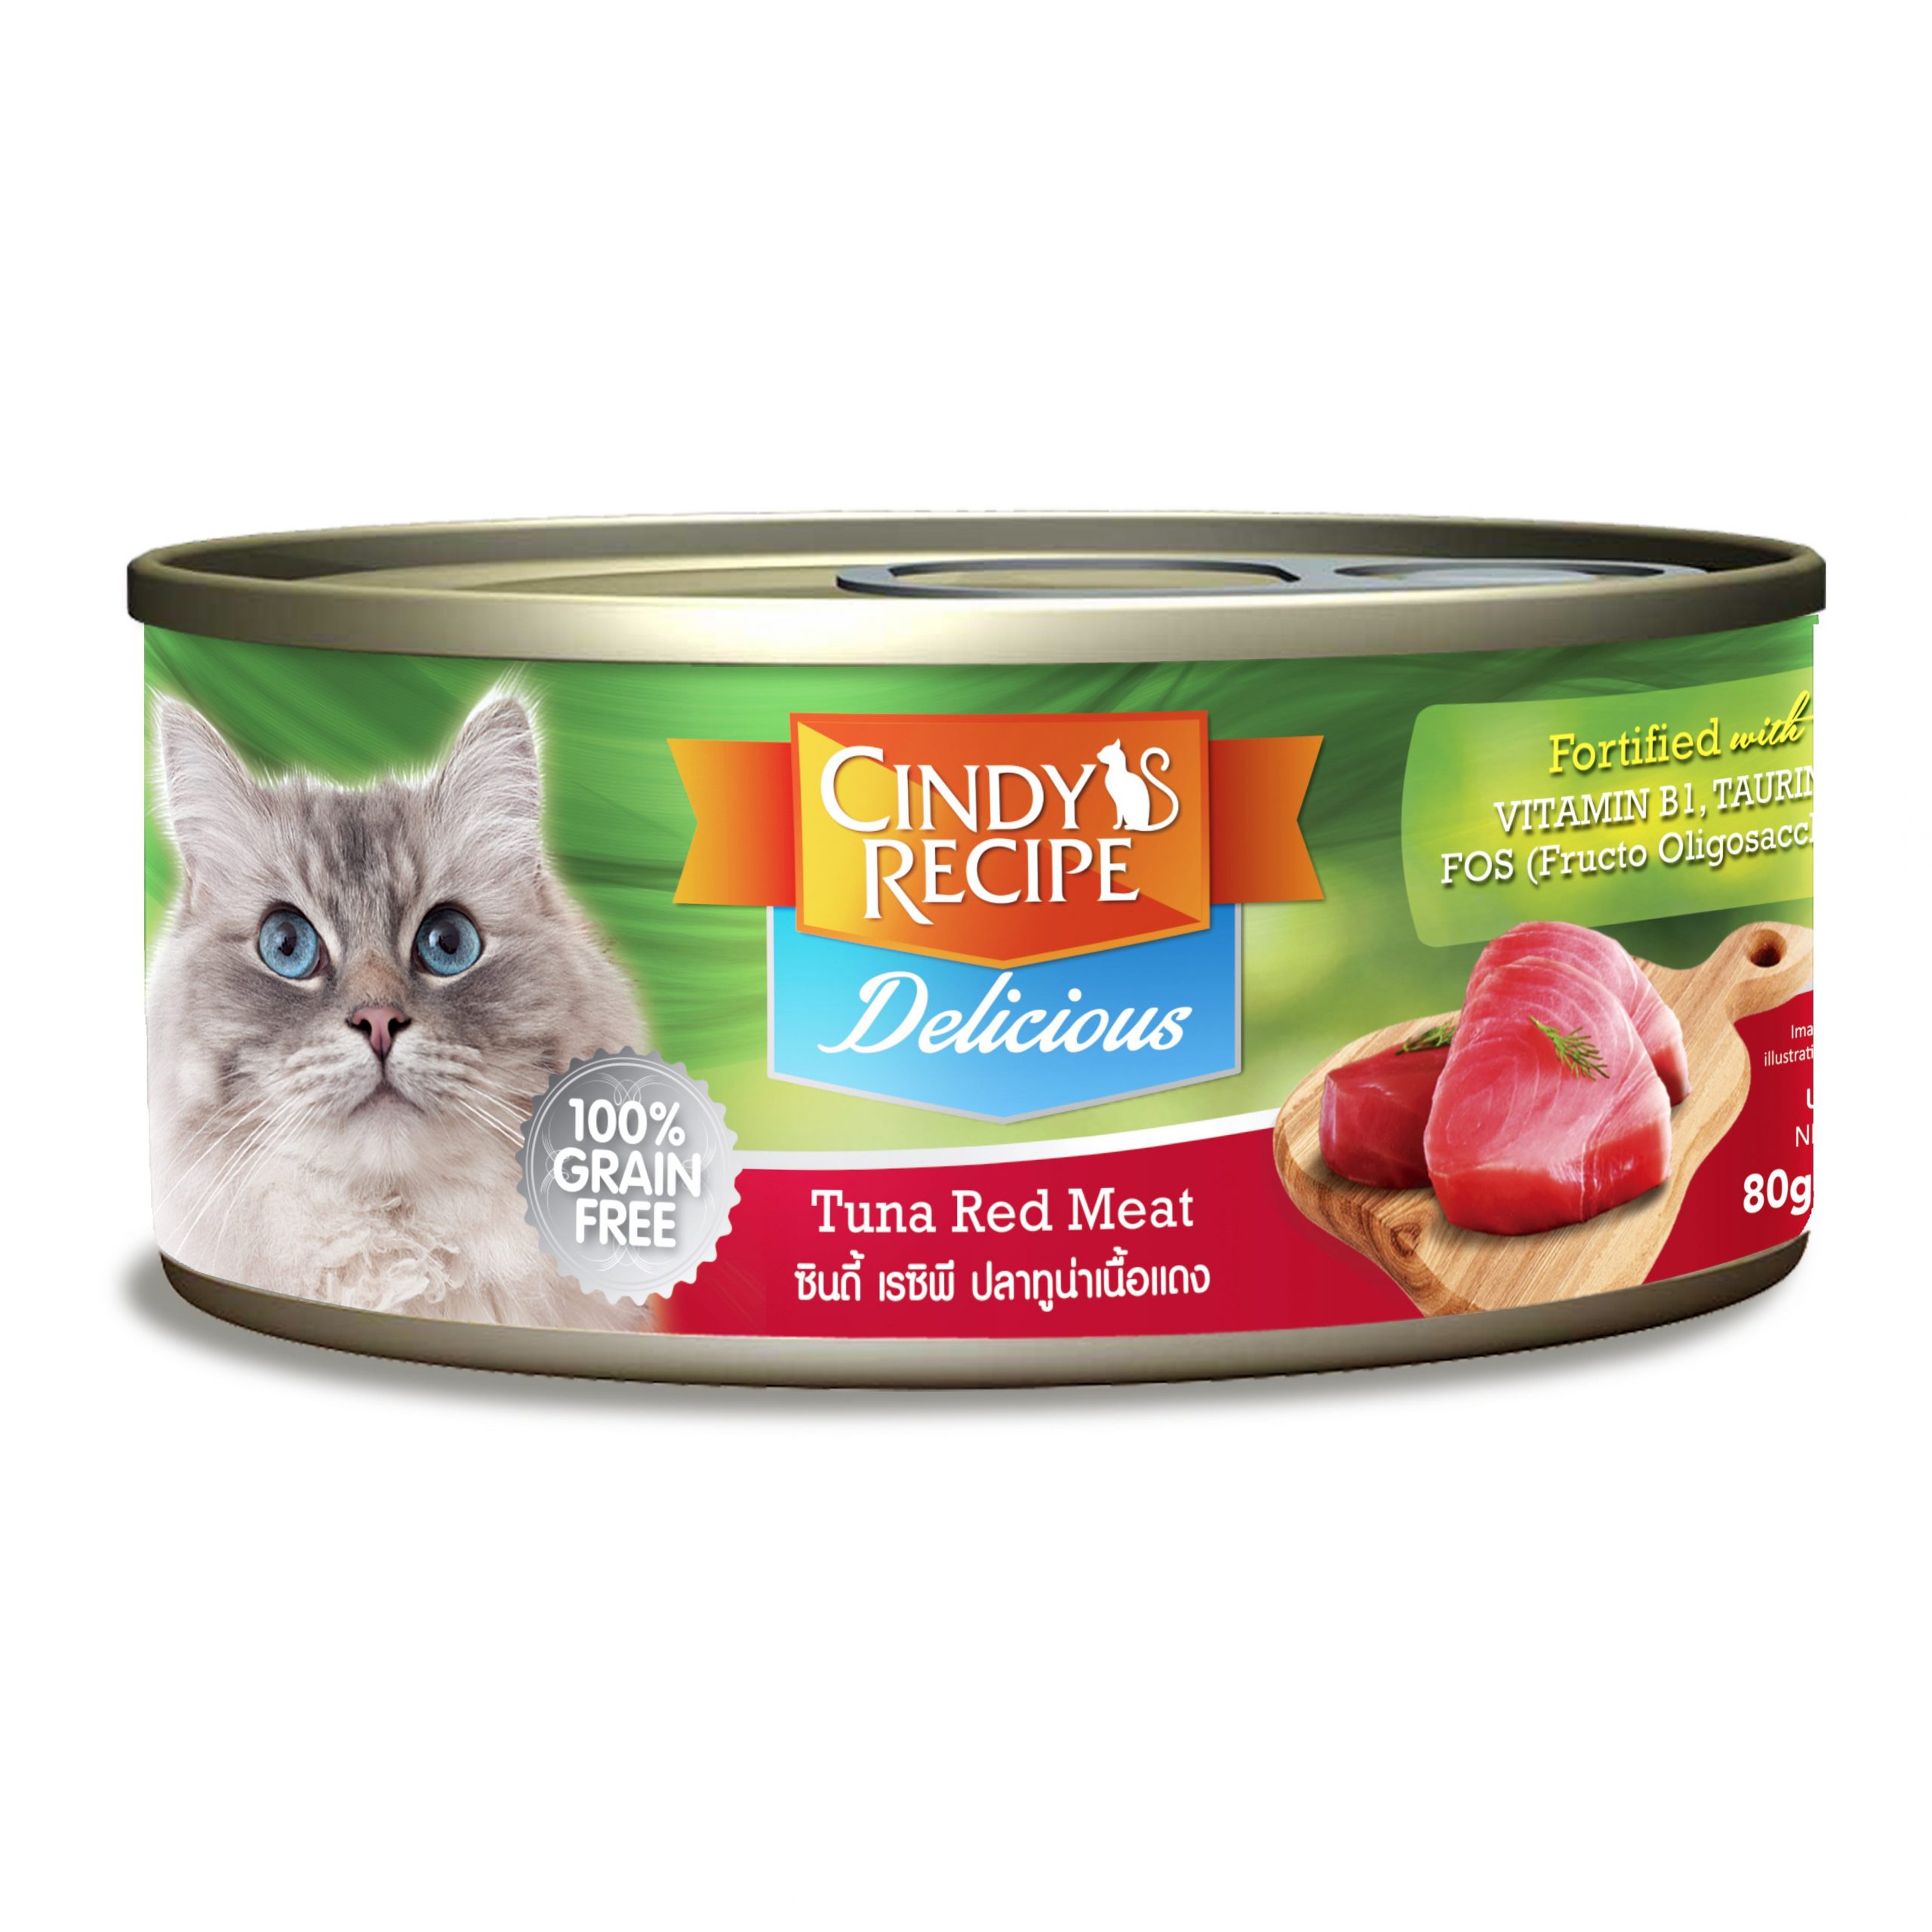 Cindy’s Recipe Delicious_Tuna Red Meat